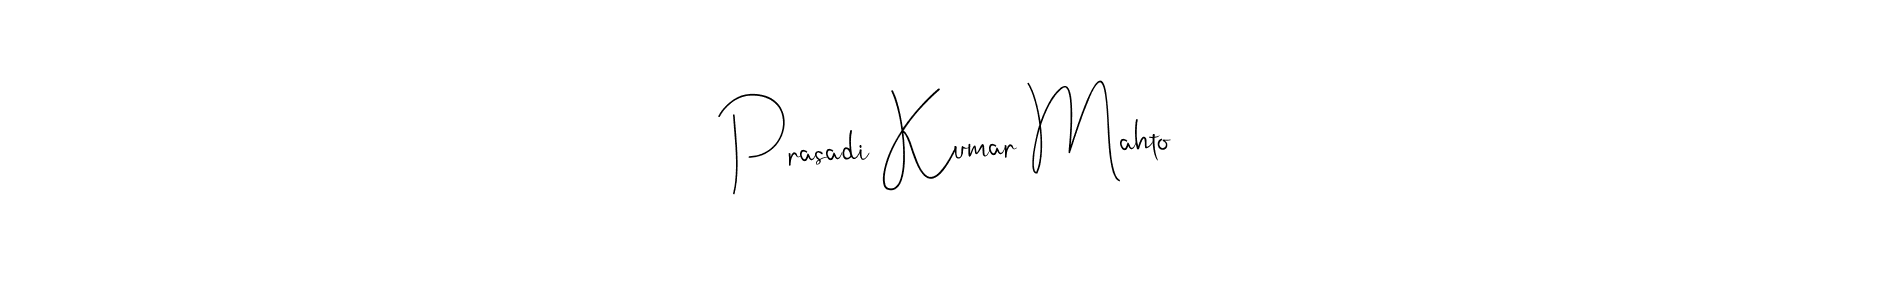 How to Draw Prasadi Kumar Mahto signature style? Andilay-7BmLP is a latest design signature styles for name Prasadi Kumar Mahto. Prasadi Kumar Mahto signature style 4 images and pictures png